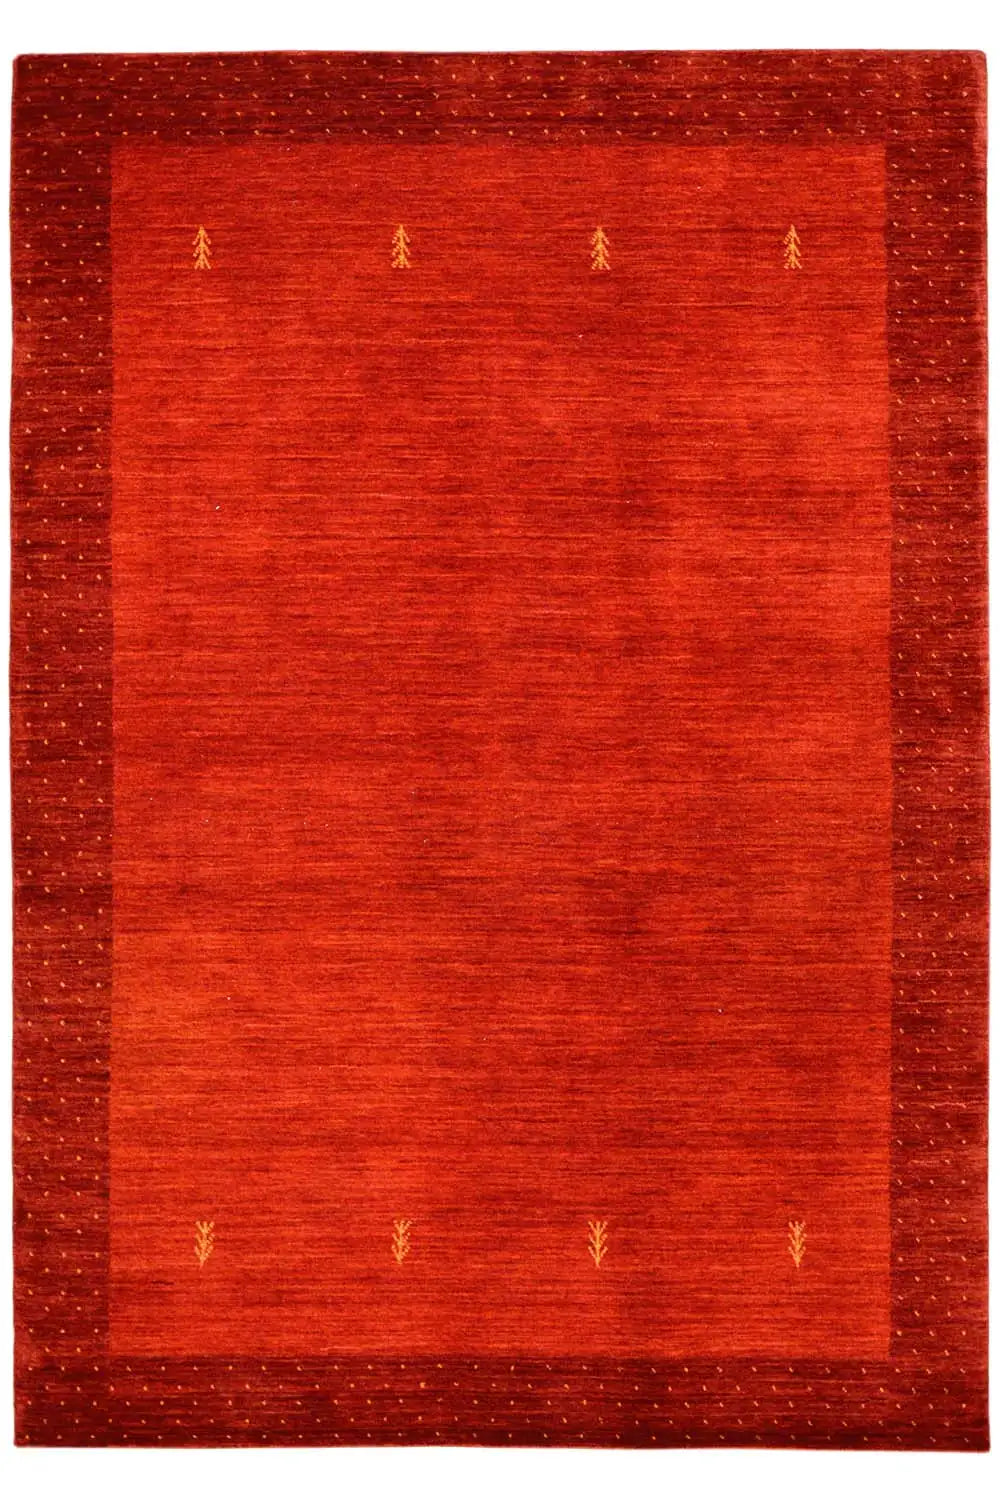 Gabbeh - Loom (198x136cm) - German Carpet Shop